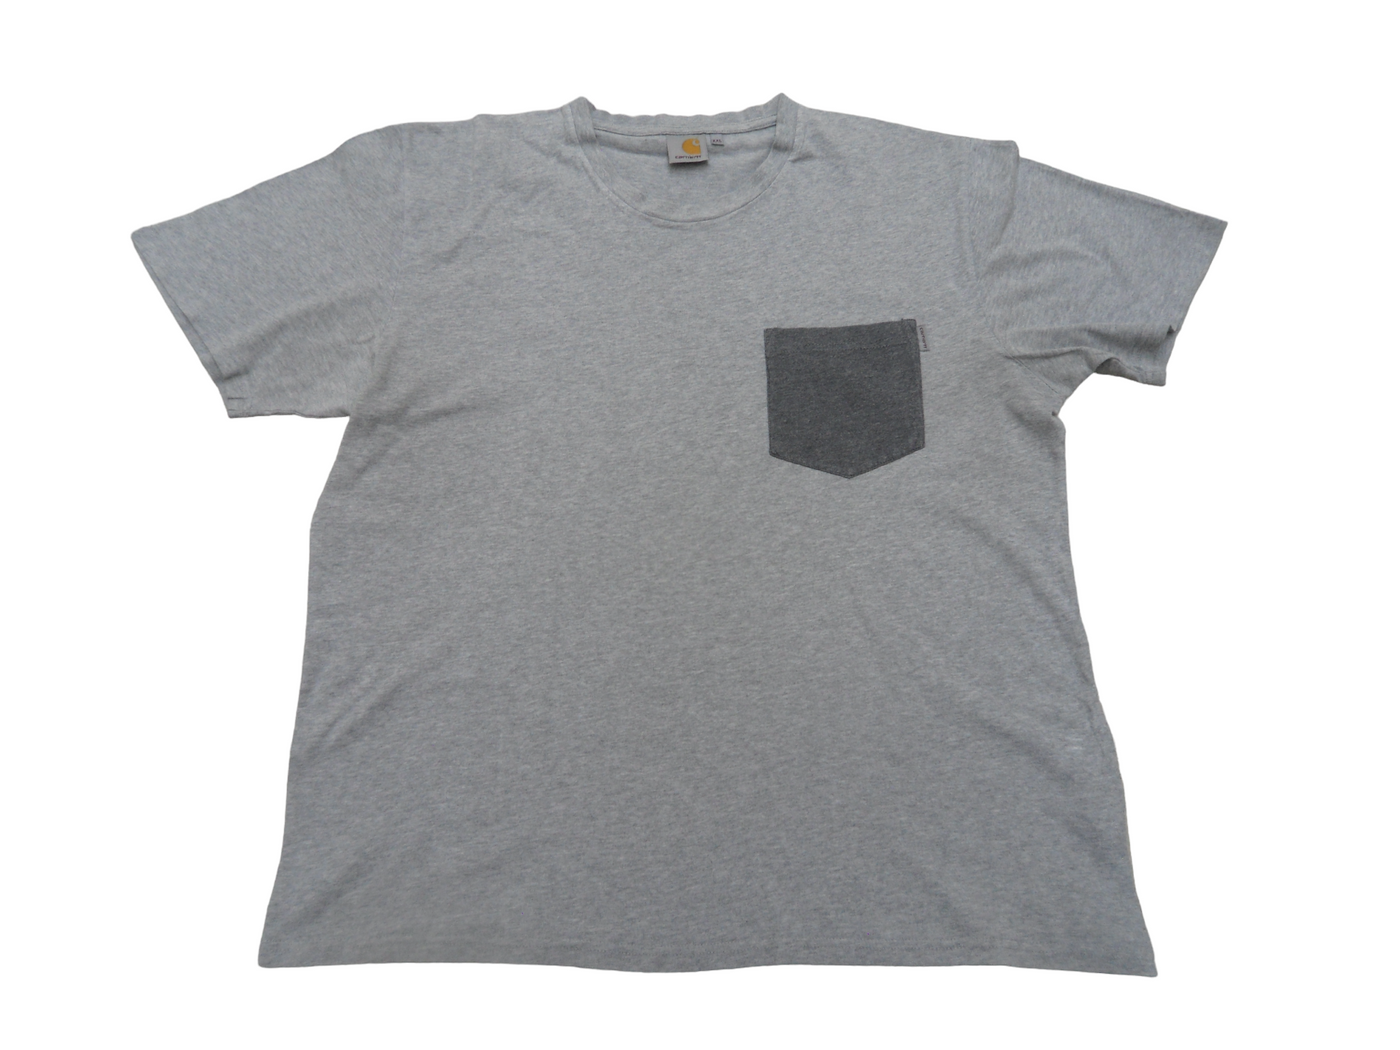 Vintage Carhartt Grey Cotton Men's T-Shirt Size - XXL